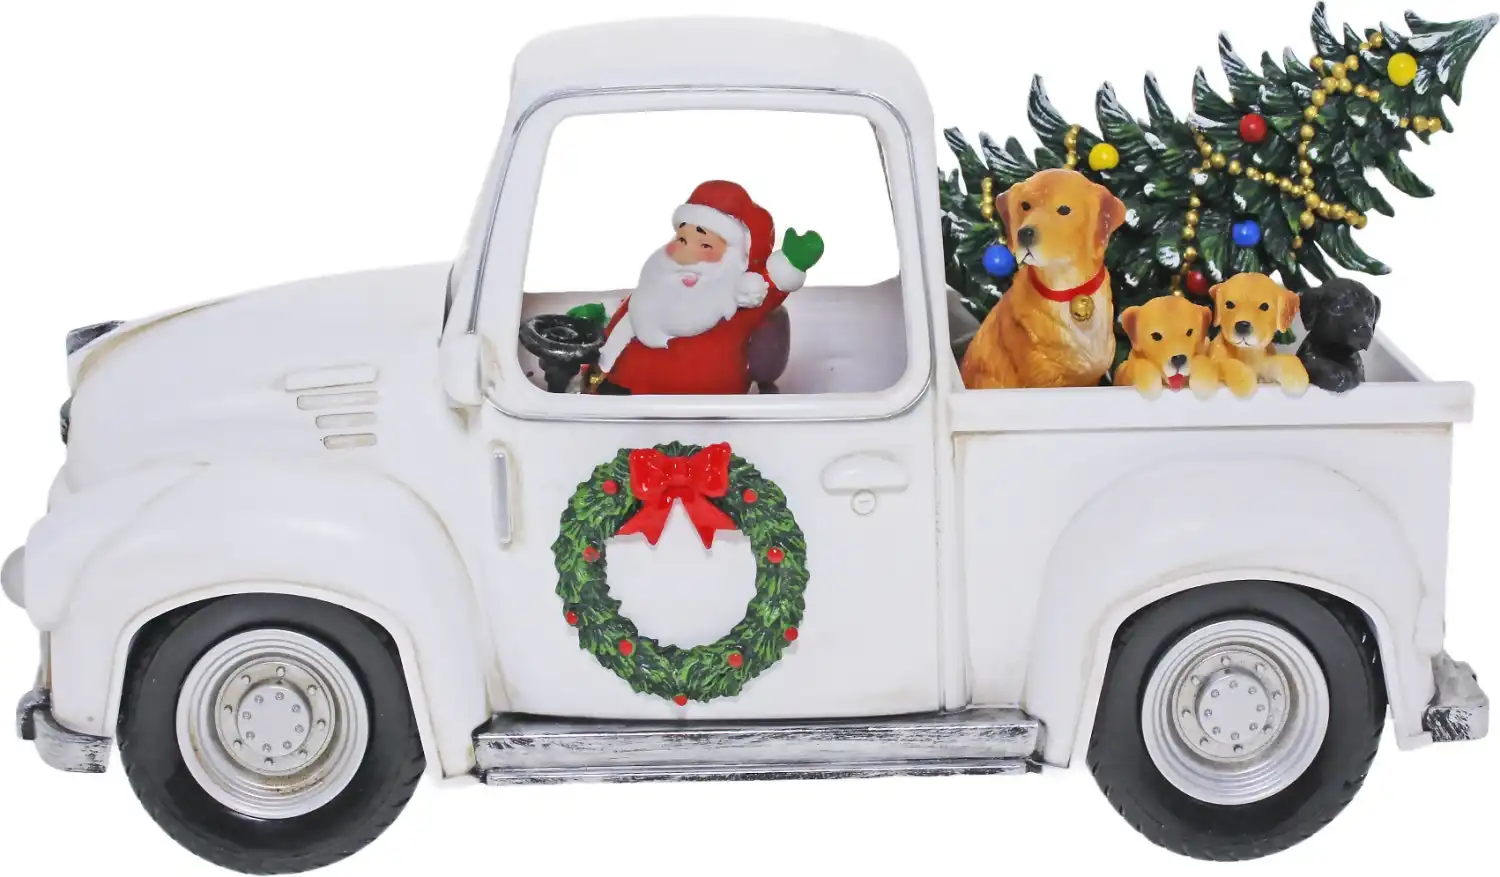 Cotton Candy - Xmas White Santa Ute Lantern With Dogs and Christmas Tree